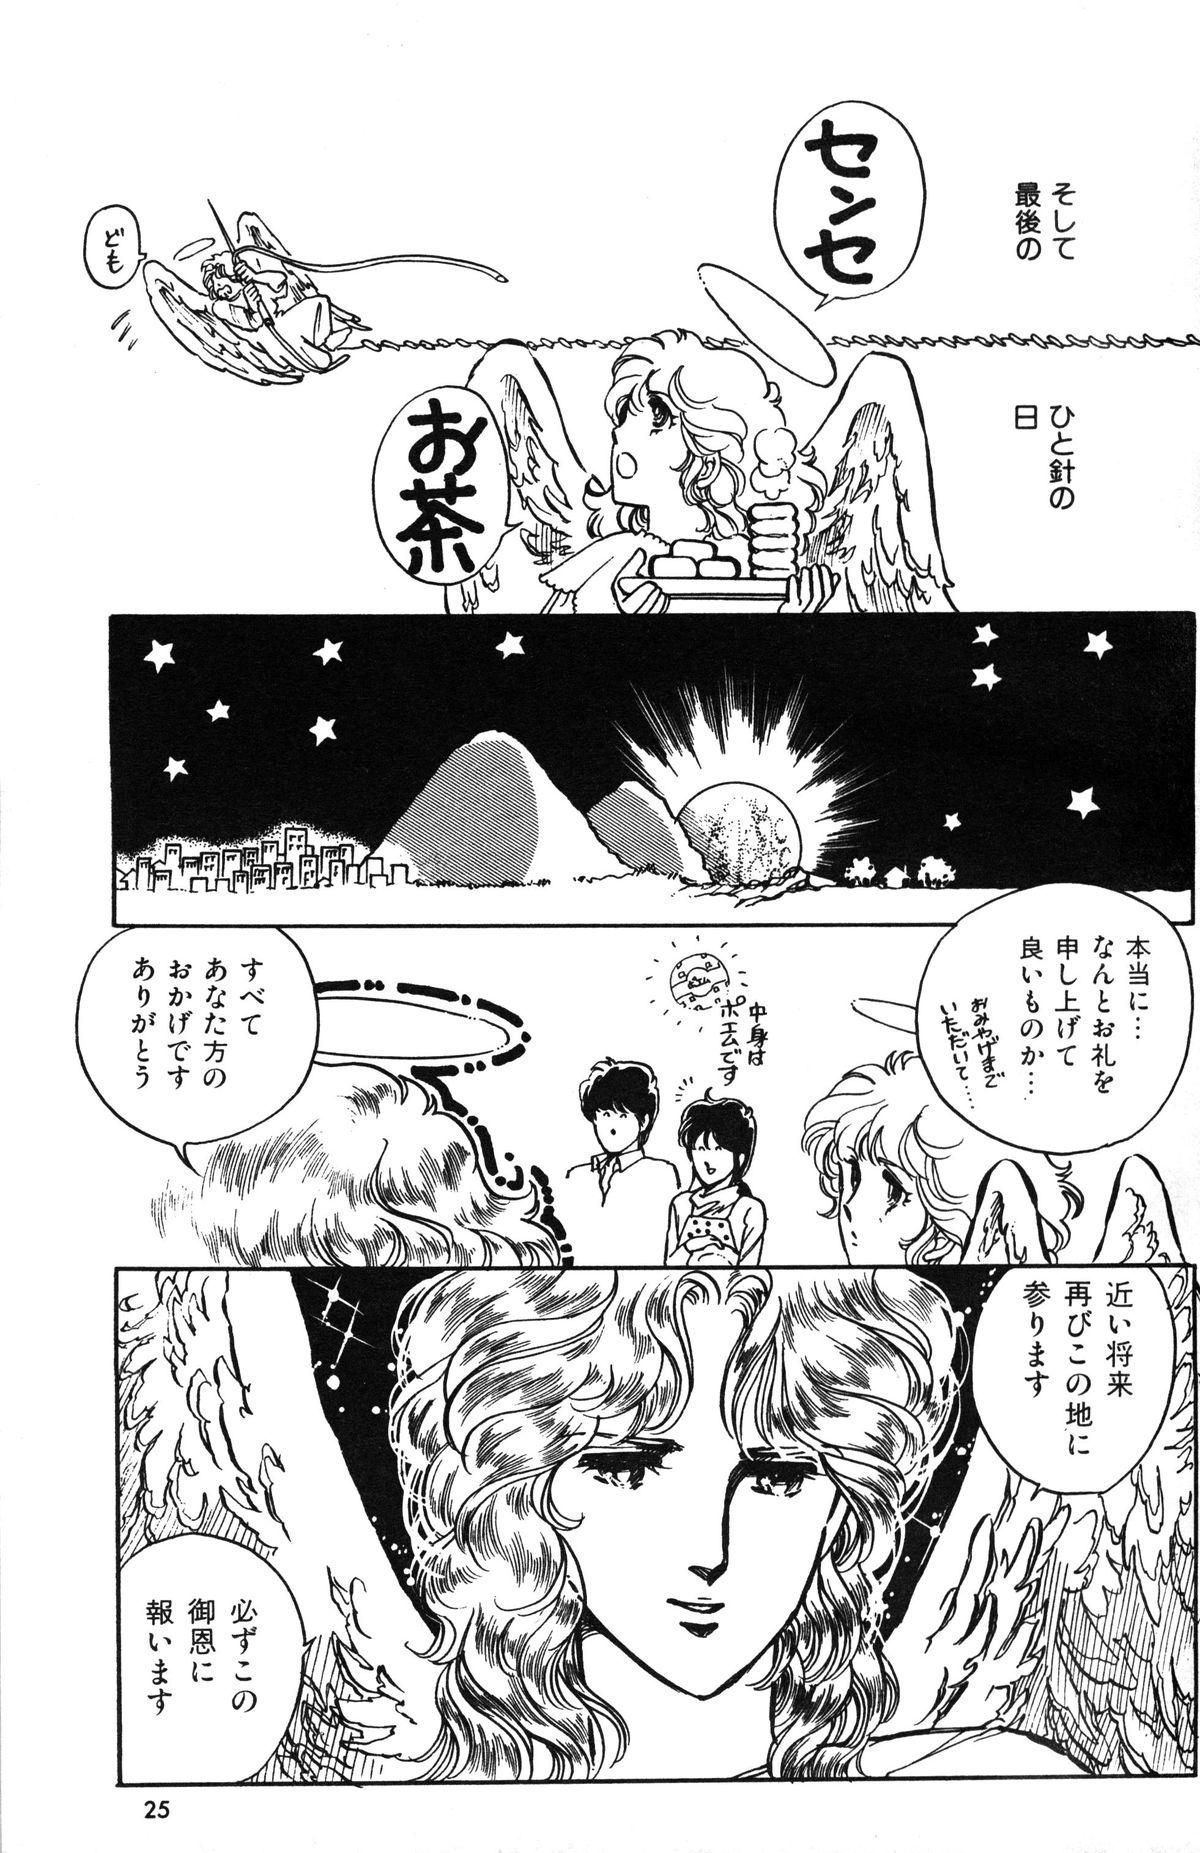 Melon Comic No. 01, メロンコミック 昭和59年6月号 26